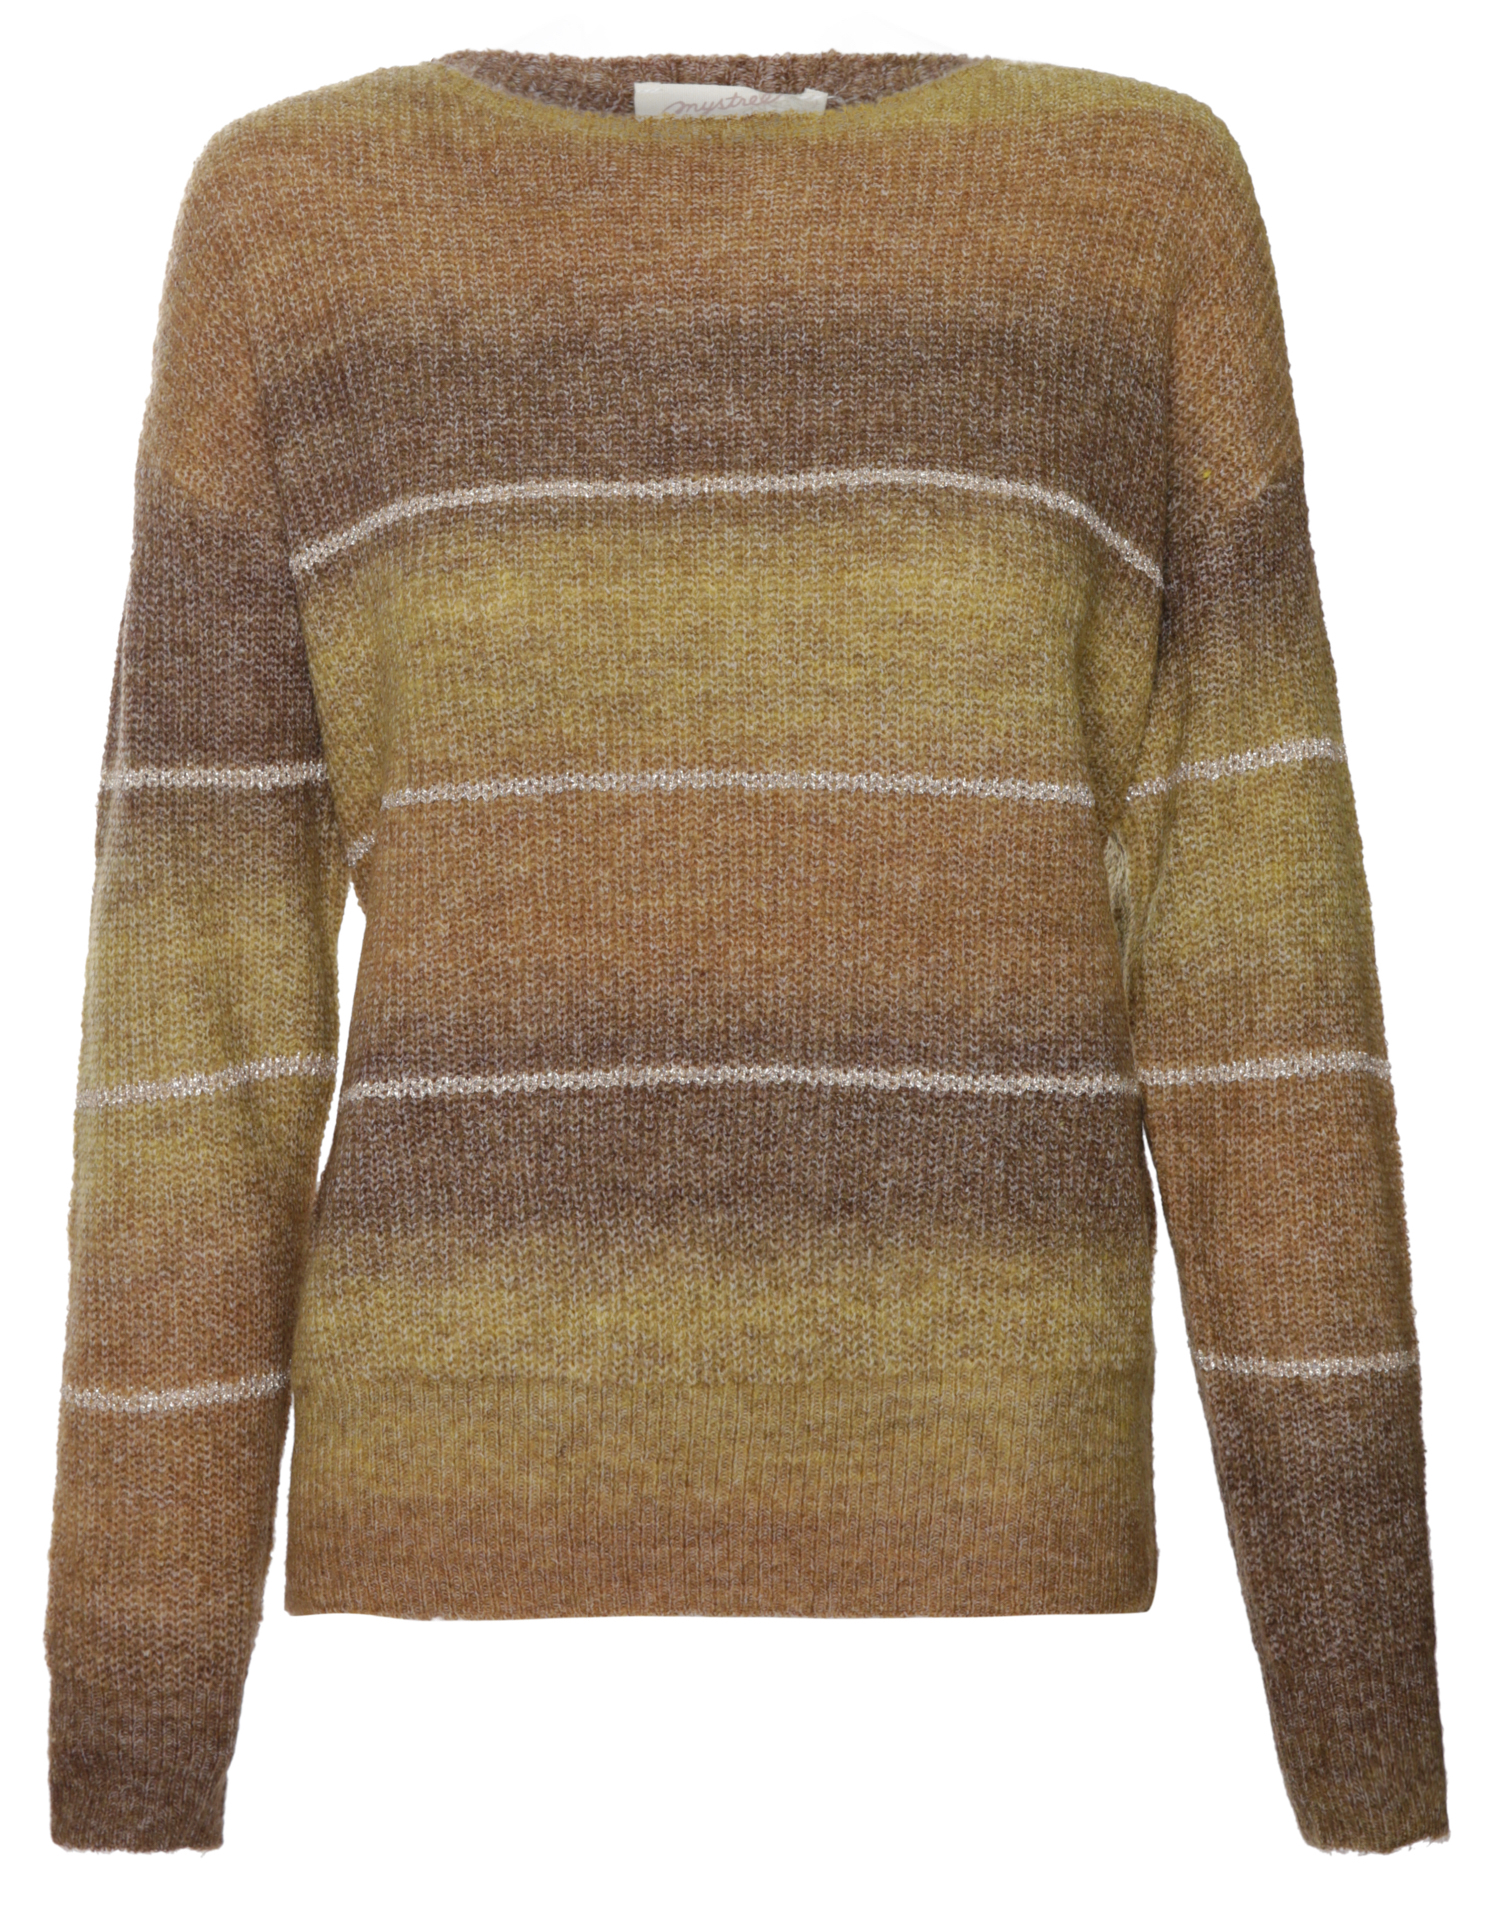 Striped Boatneck Sweater